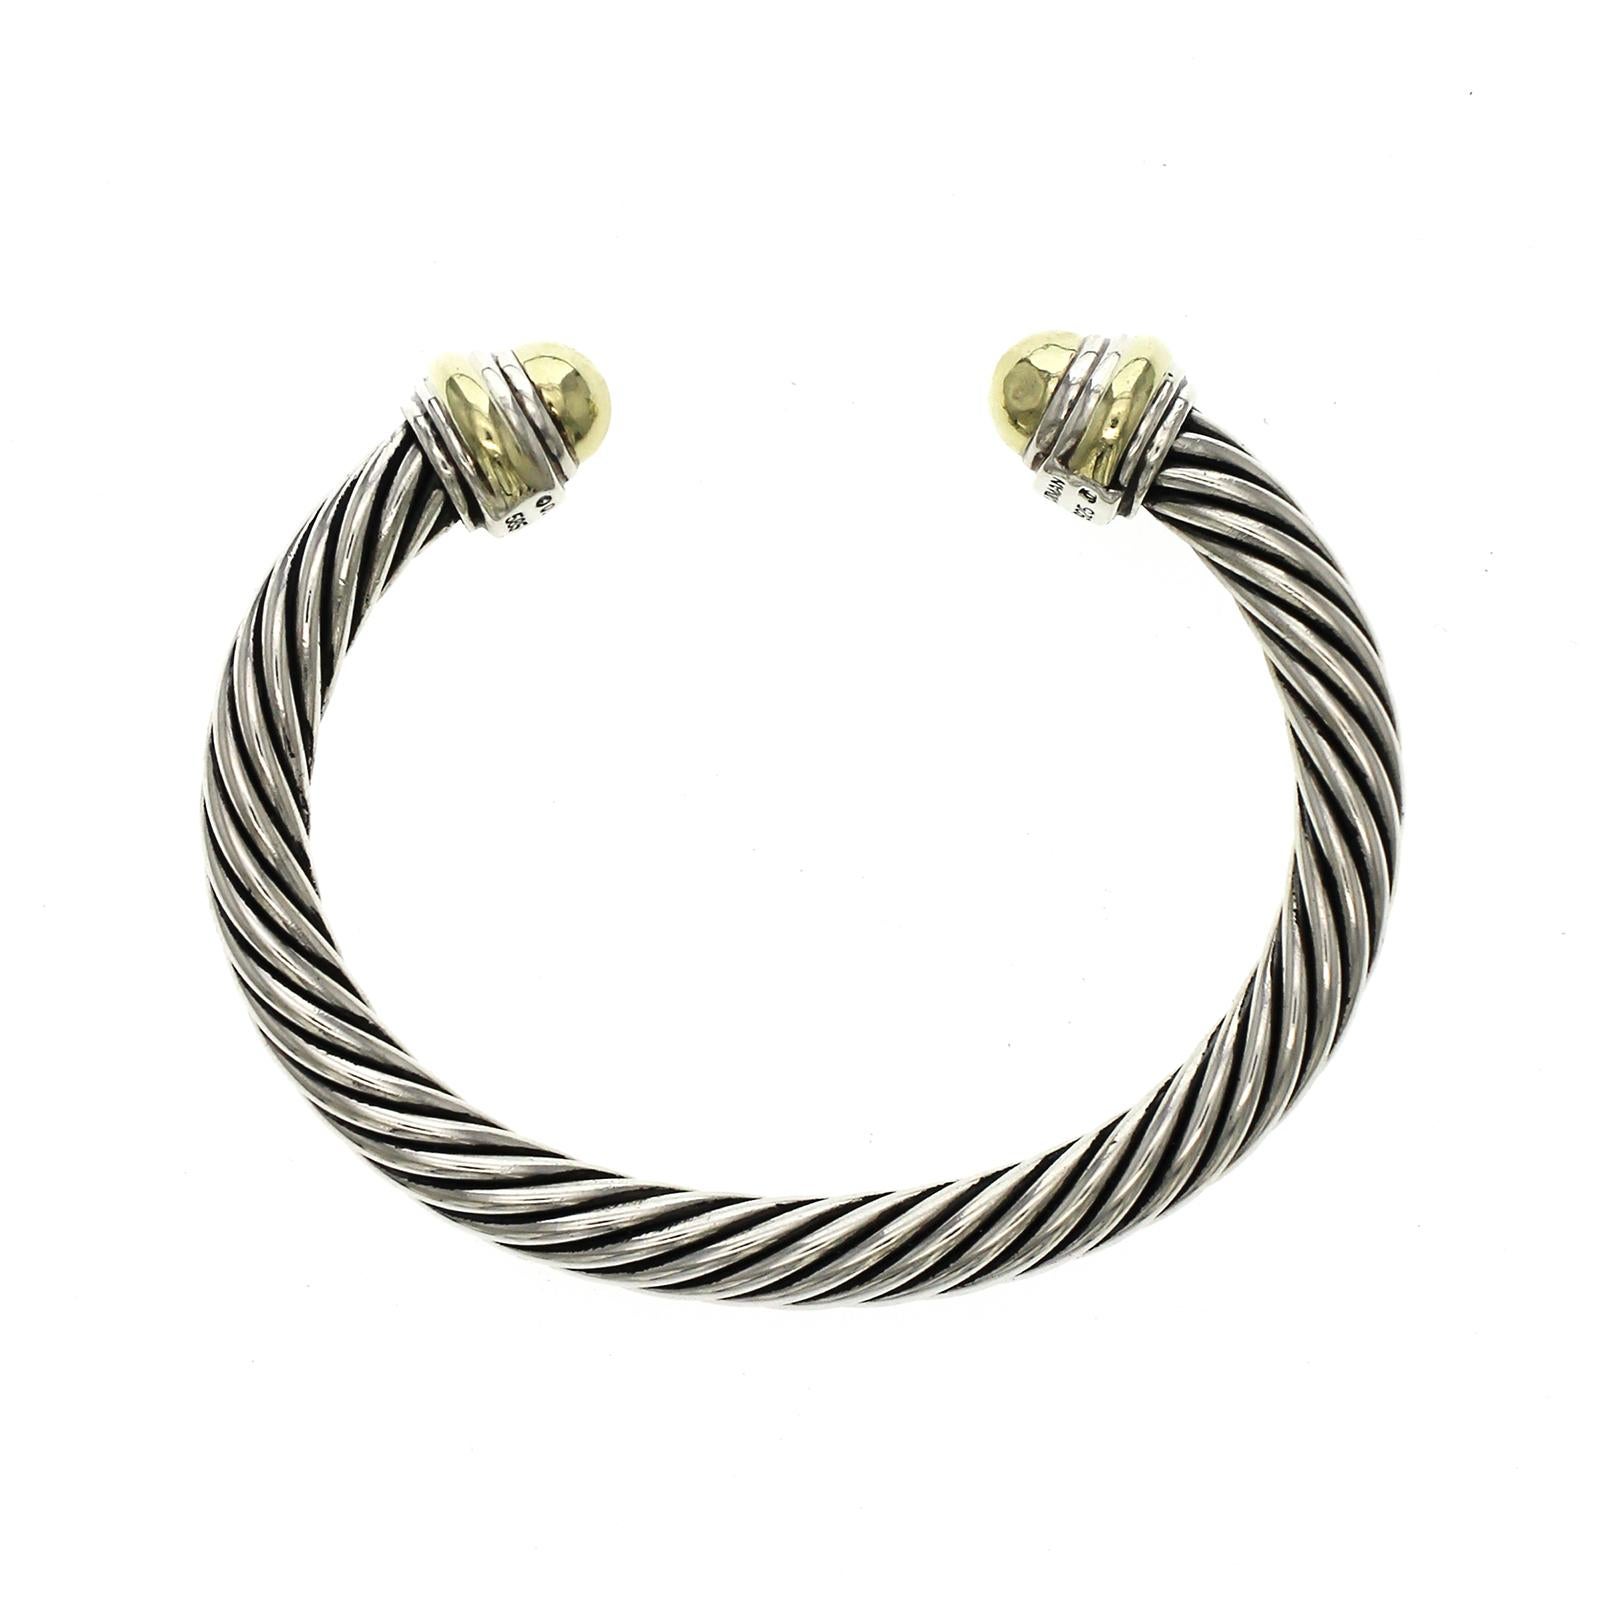 David Yurman 925 Sterling Silver & 14k Gold 7mm Cable Cuff Bracelet Size 6.5